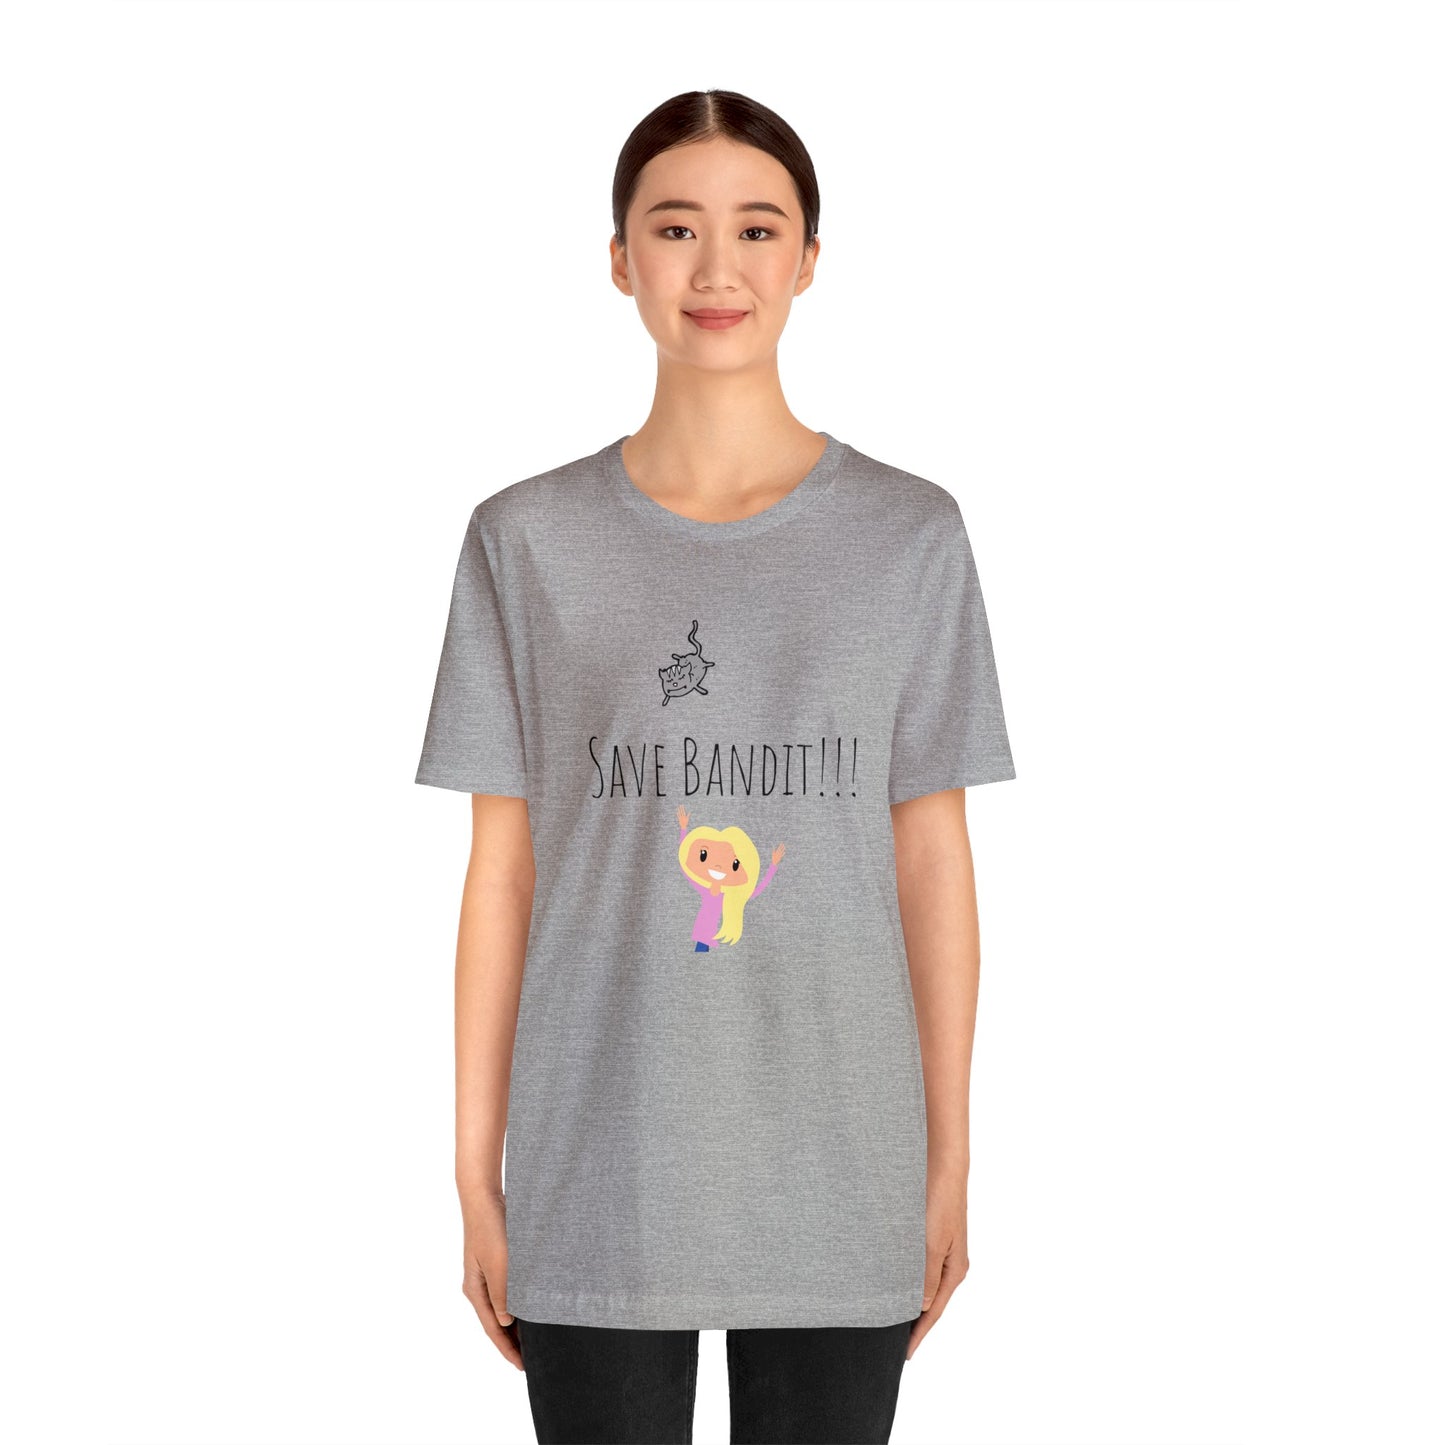 Save bandit t-shirt // the Office show merchandise